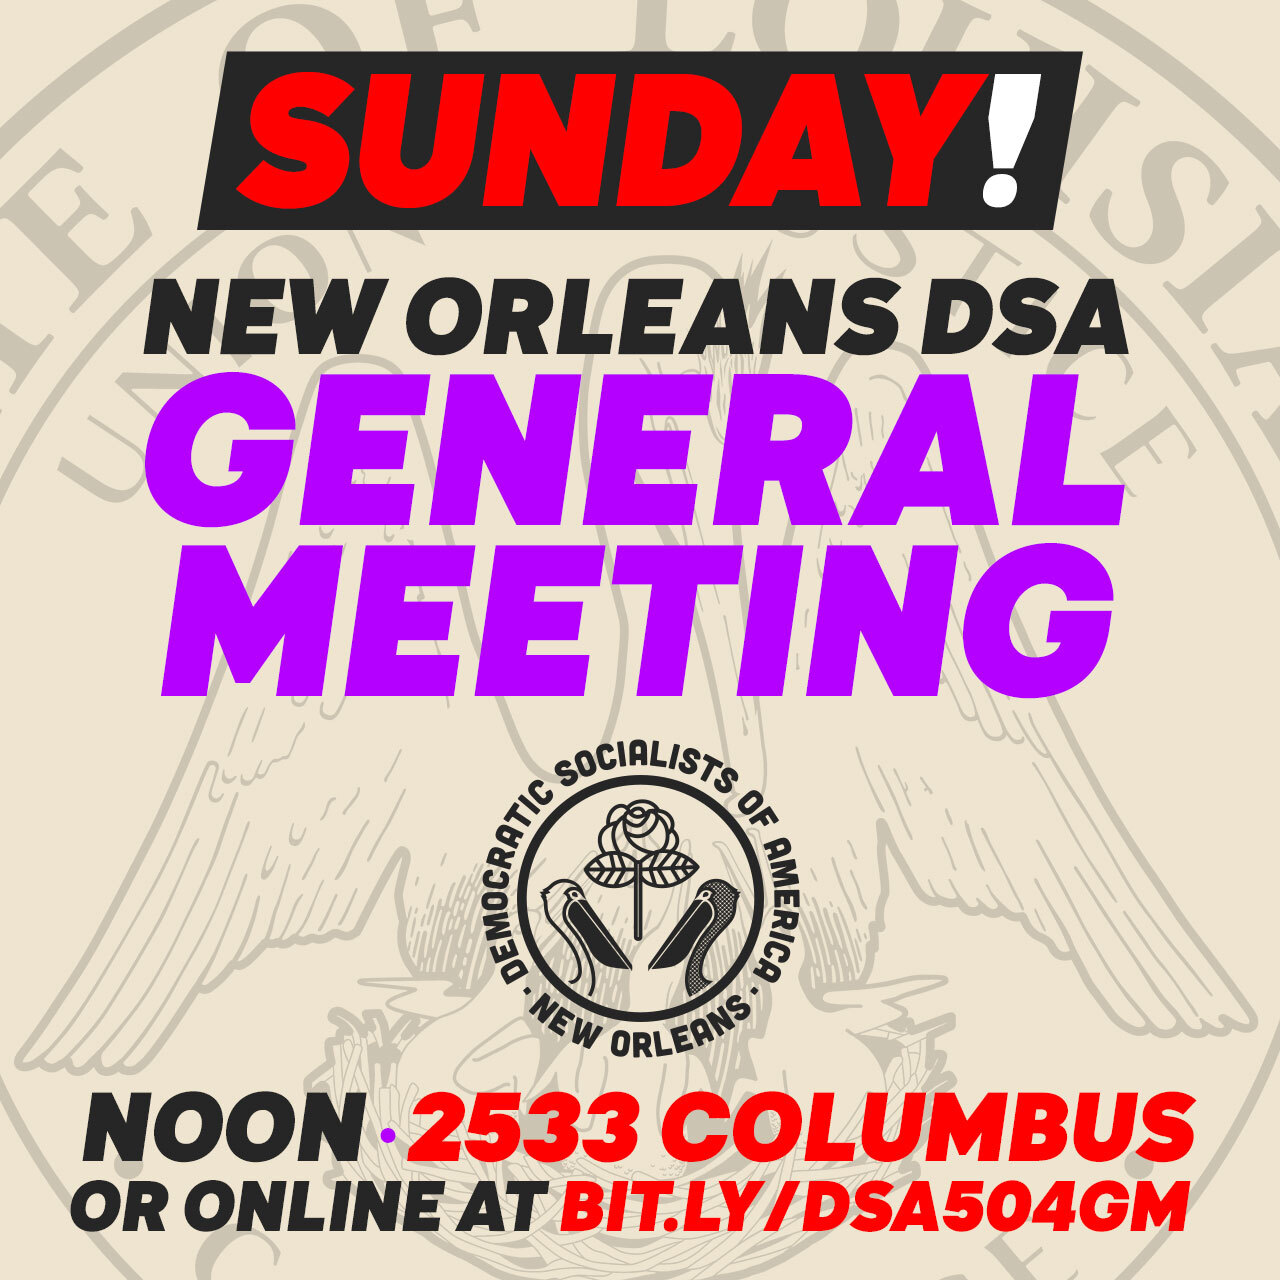 Sunday! New Orleans DSA General Meeting. Noon. 2533 Columbus Street. Or Online at bit.ly/dsa504gm